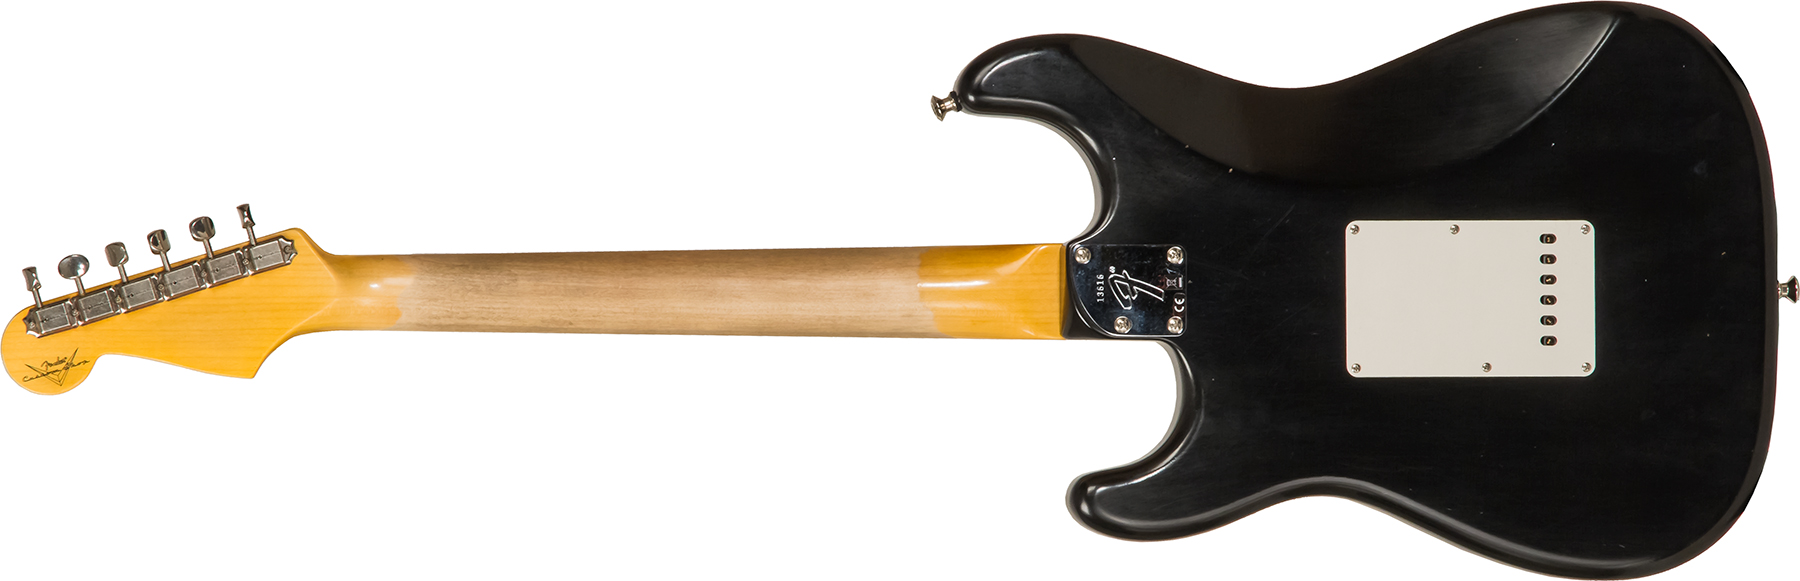 Fender Custom Shop Strat Postmodern 3s Trem Rw #xn13616 - Journeyman Relic Aged Black - Guitare Électrique Forme Str - Variation 1